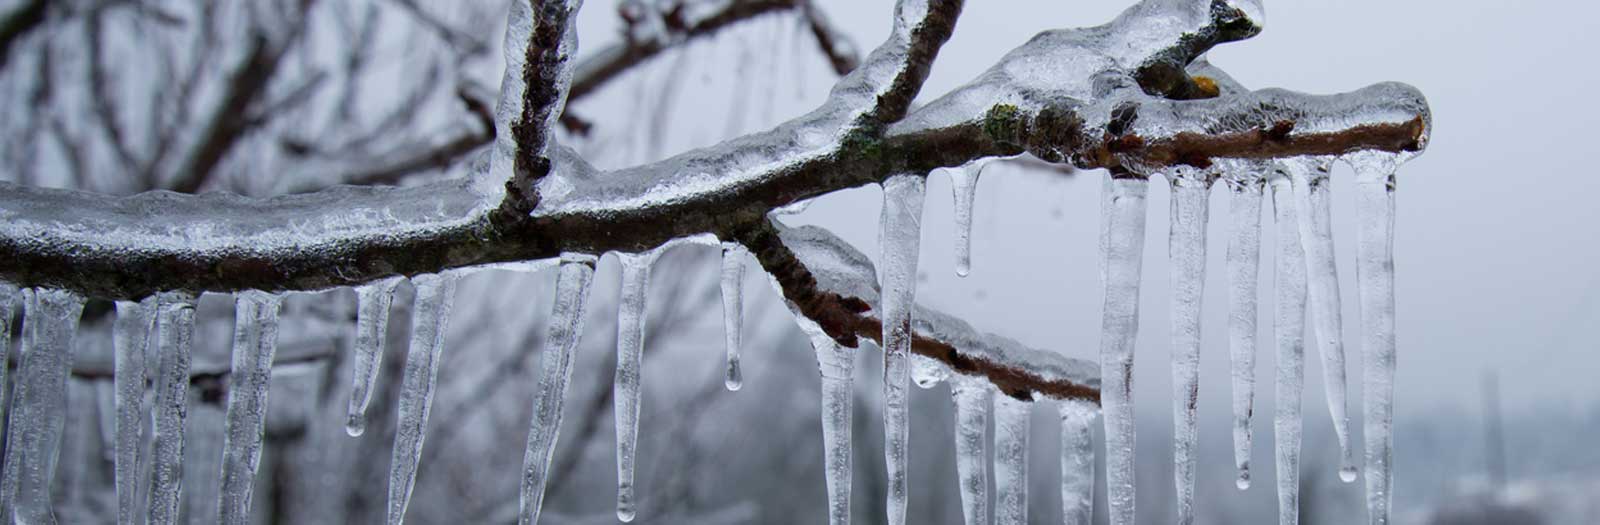 tree limb frozen in ice